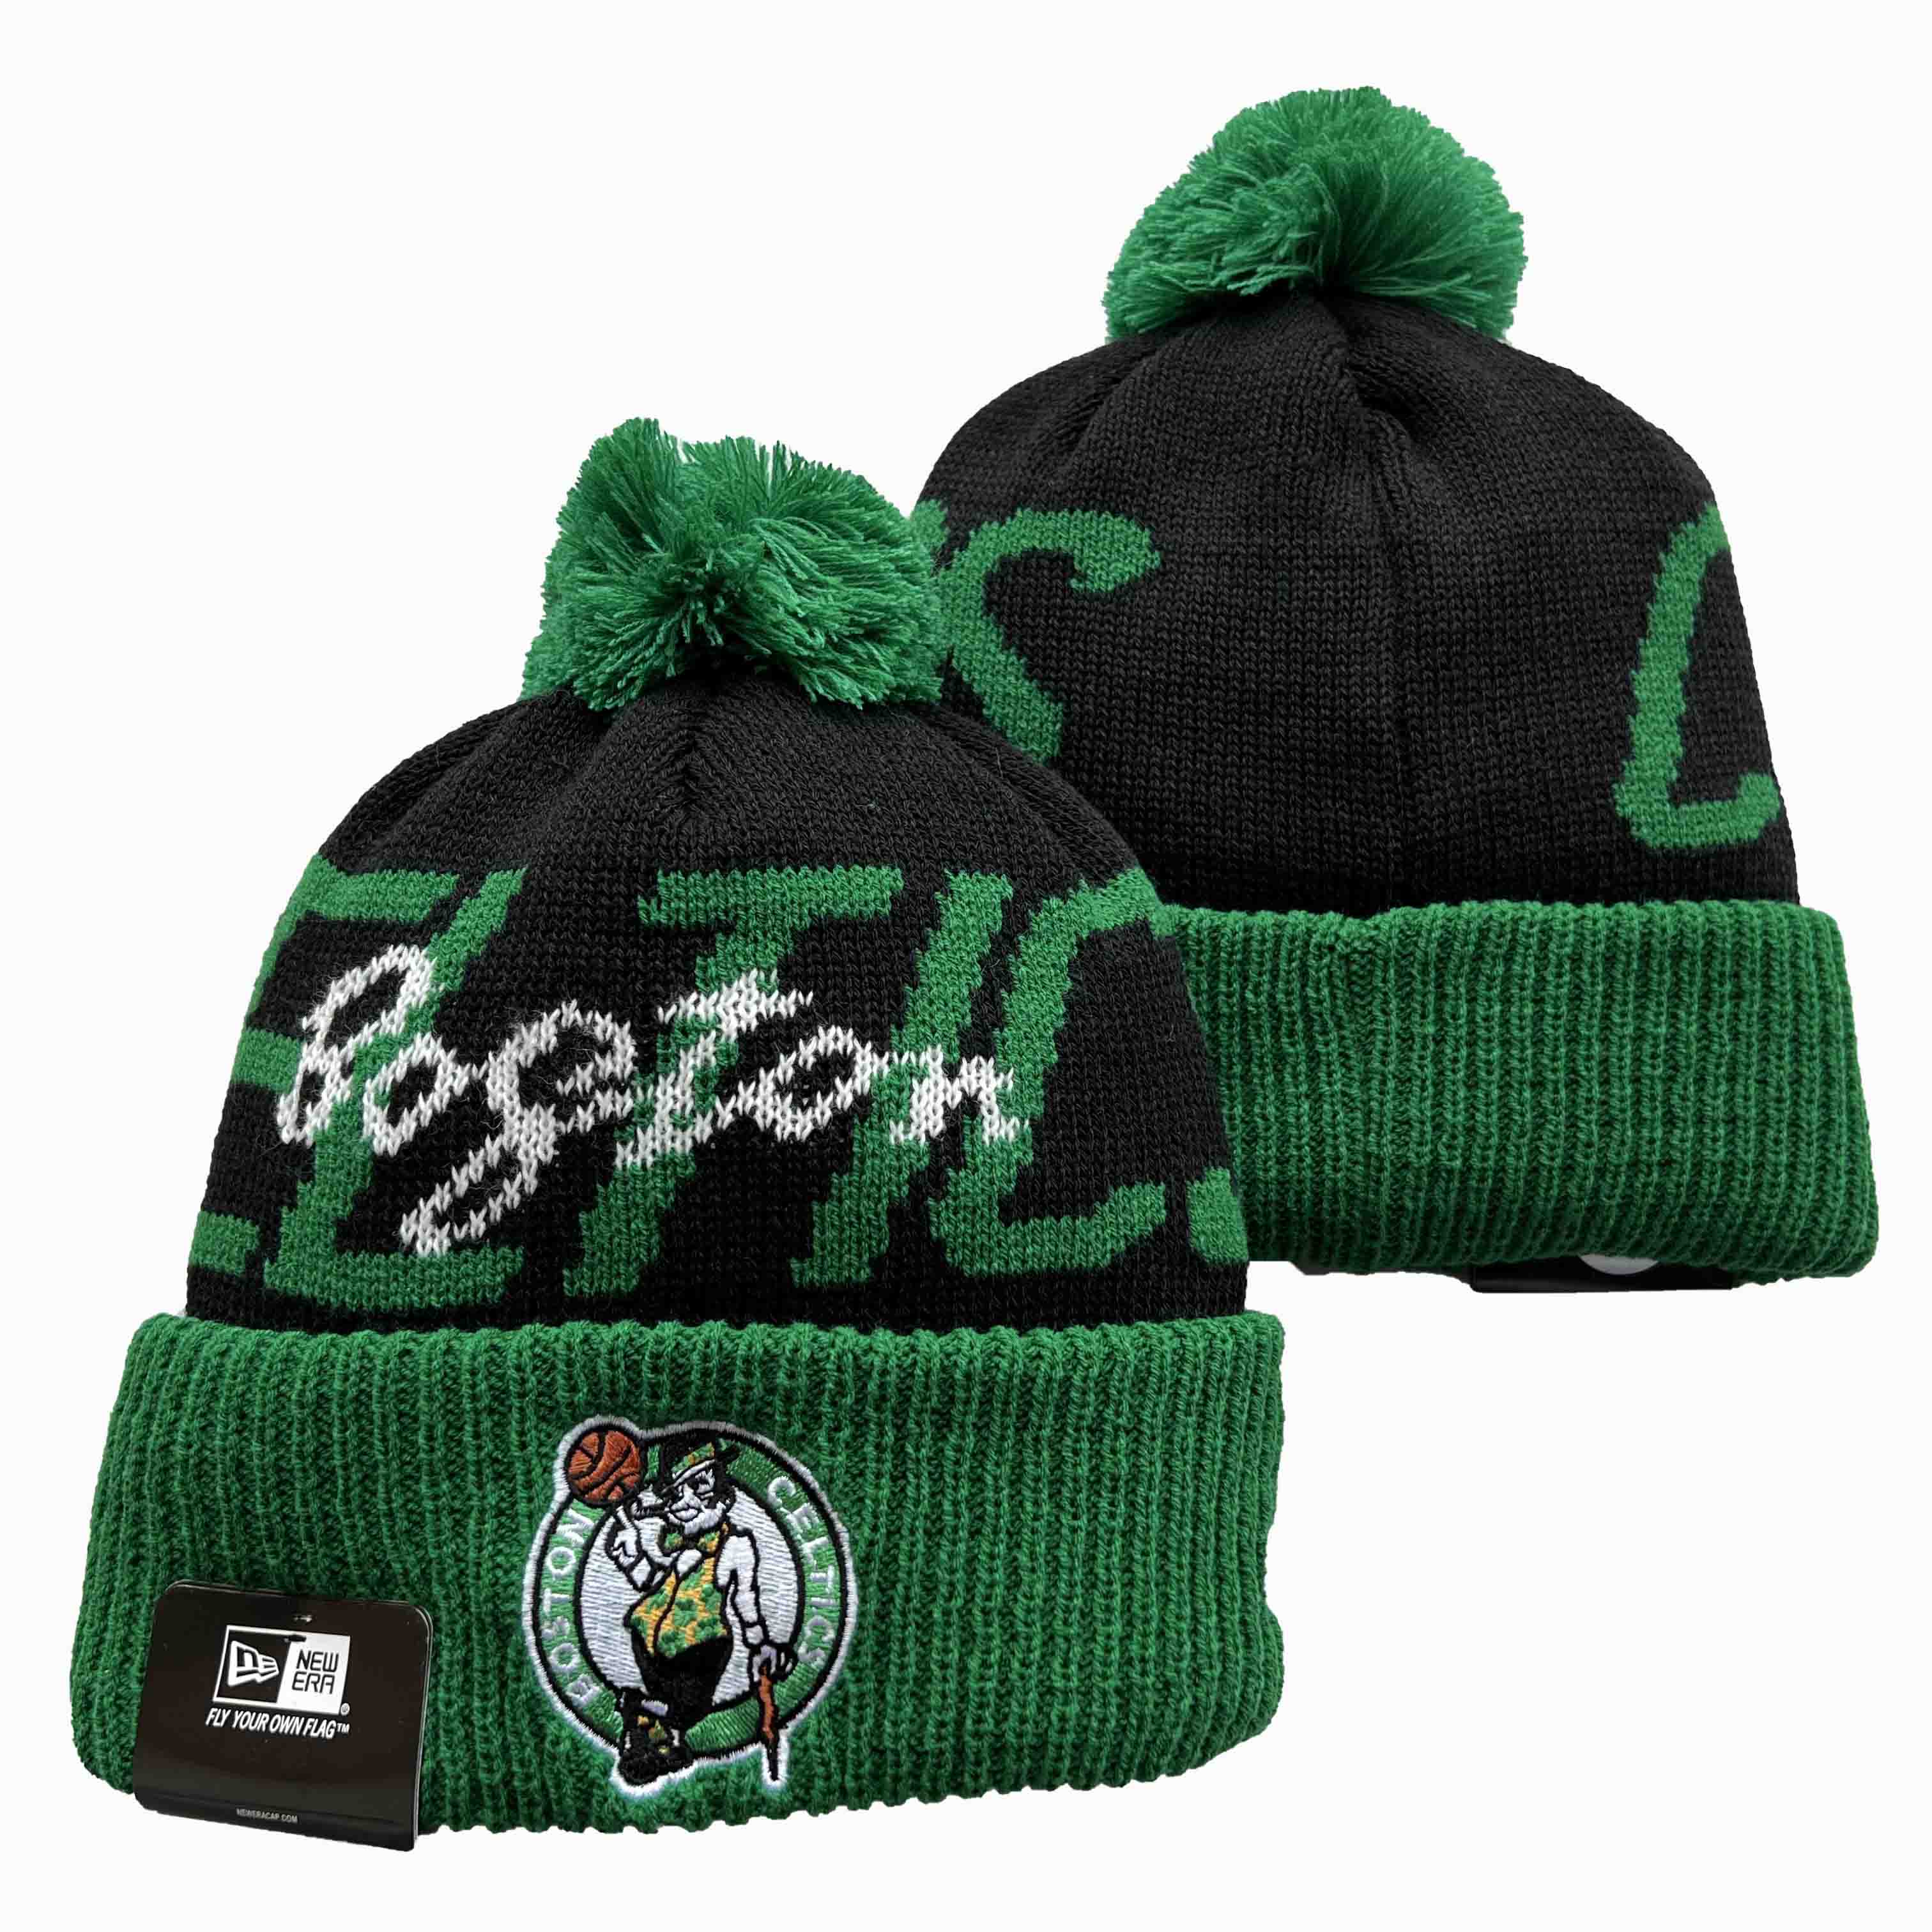 NBA Boston Celtics Beanies Knit Hats-YD486